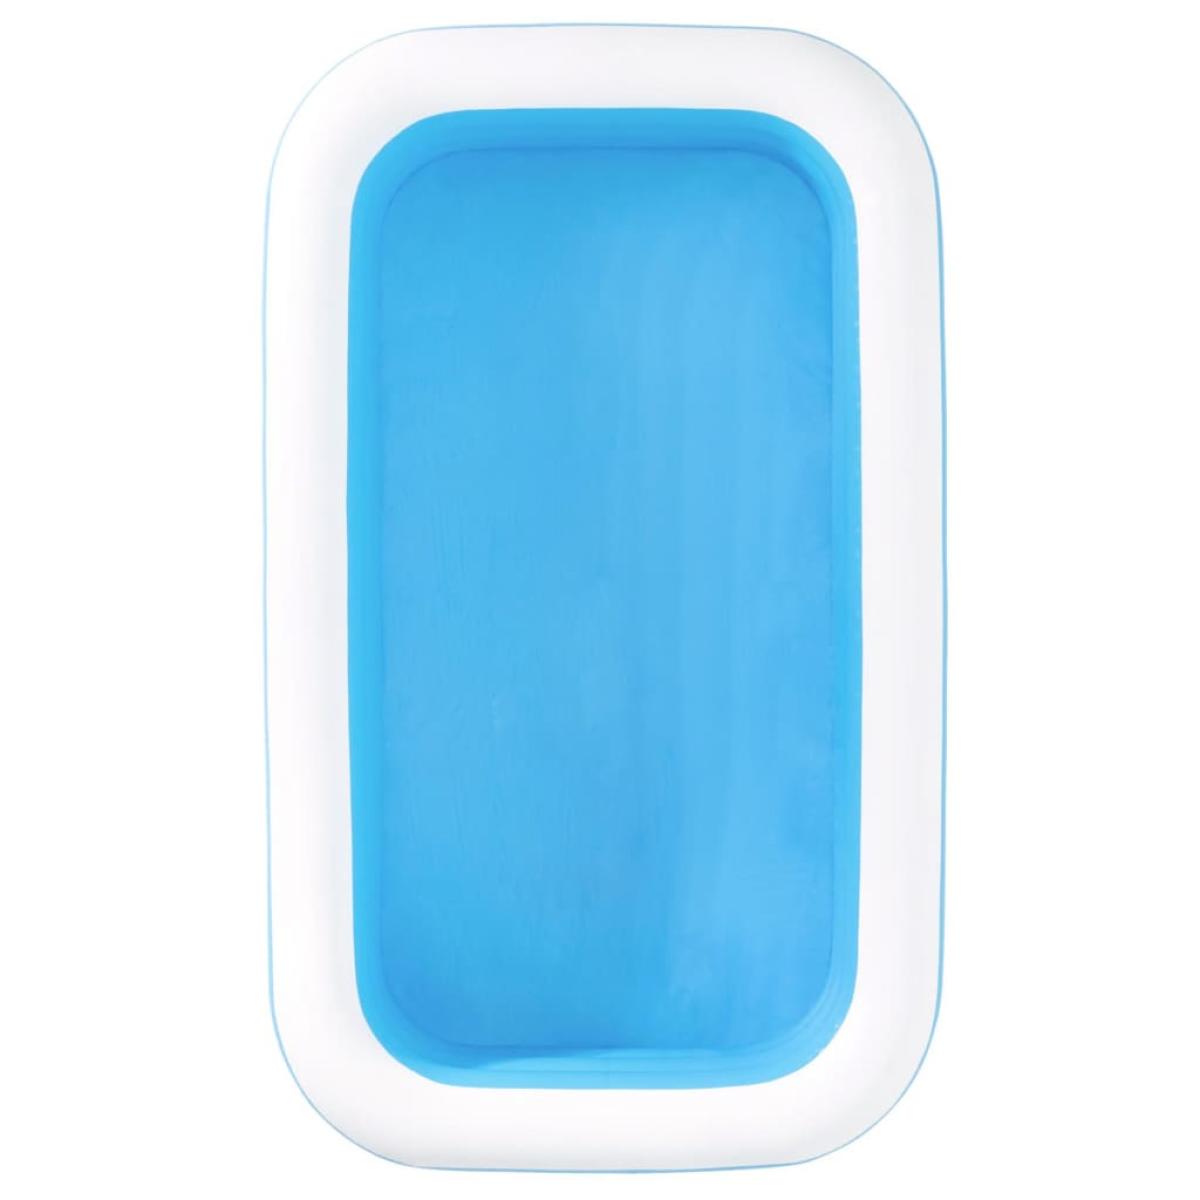 Bestway Piscina inflable familiar rectangular azul blanco 262x175x51cm